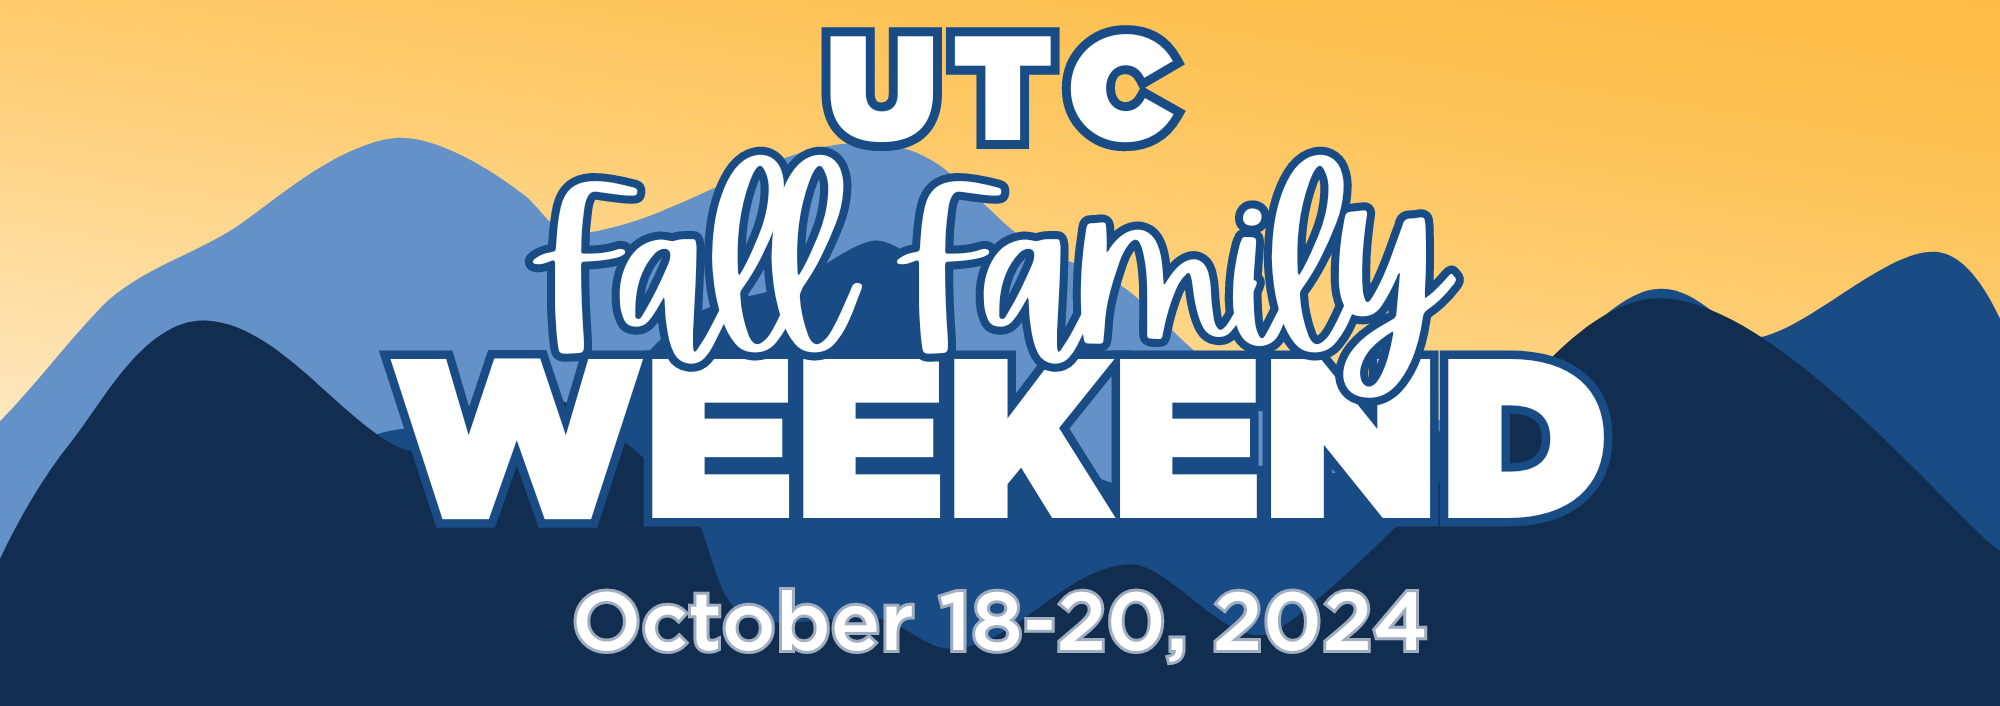 UTC Fall Family Weekend October 18-20